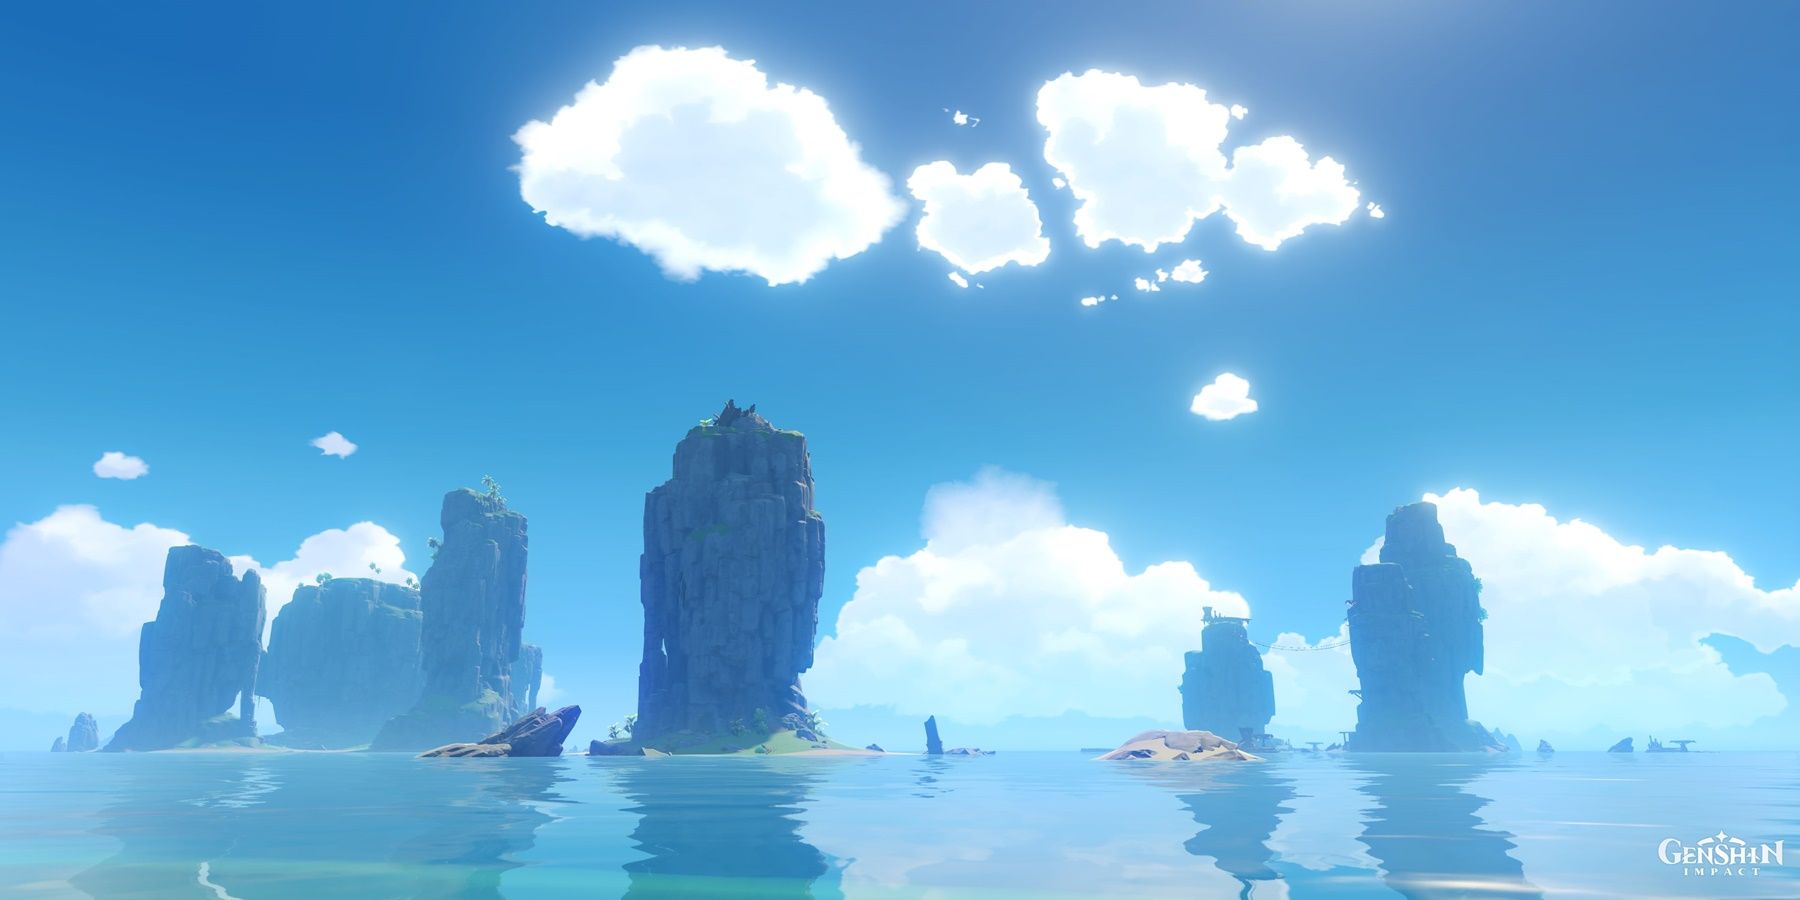 An in-game screenshot from the Genshin Impact Archipelago region